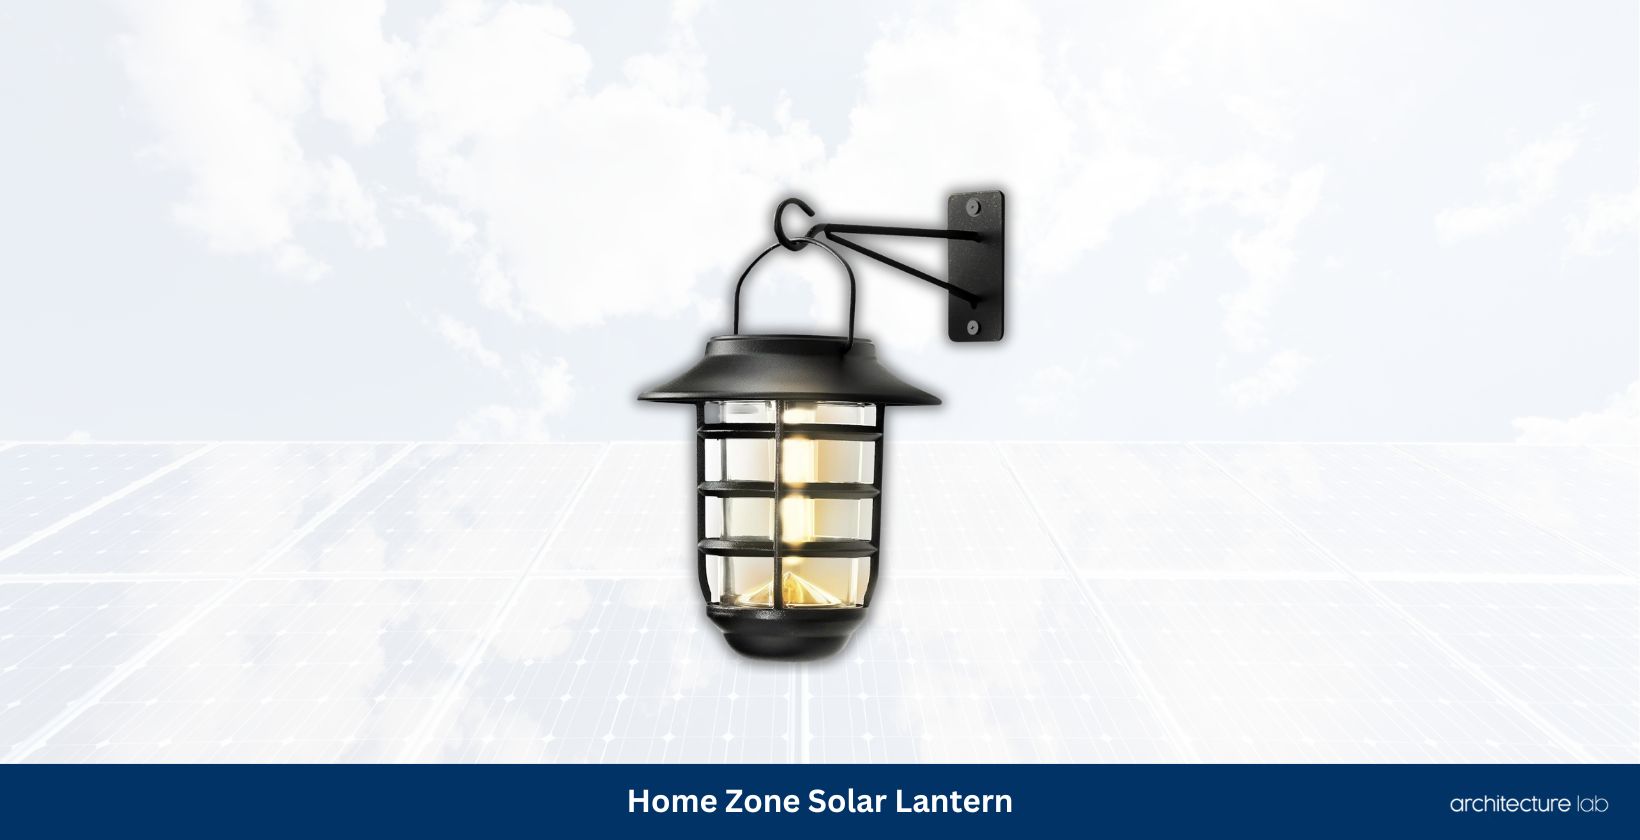 Home zone solar lantern